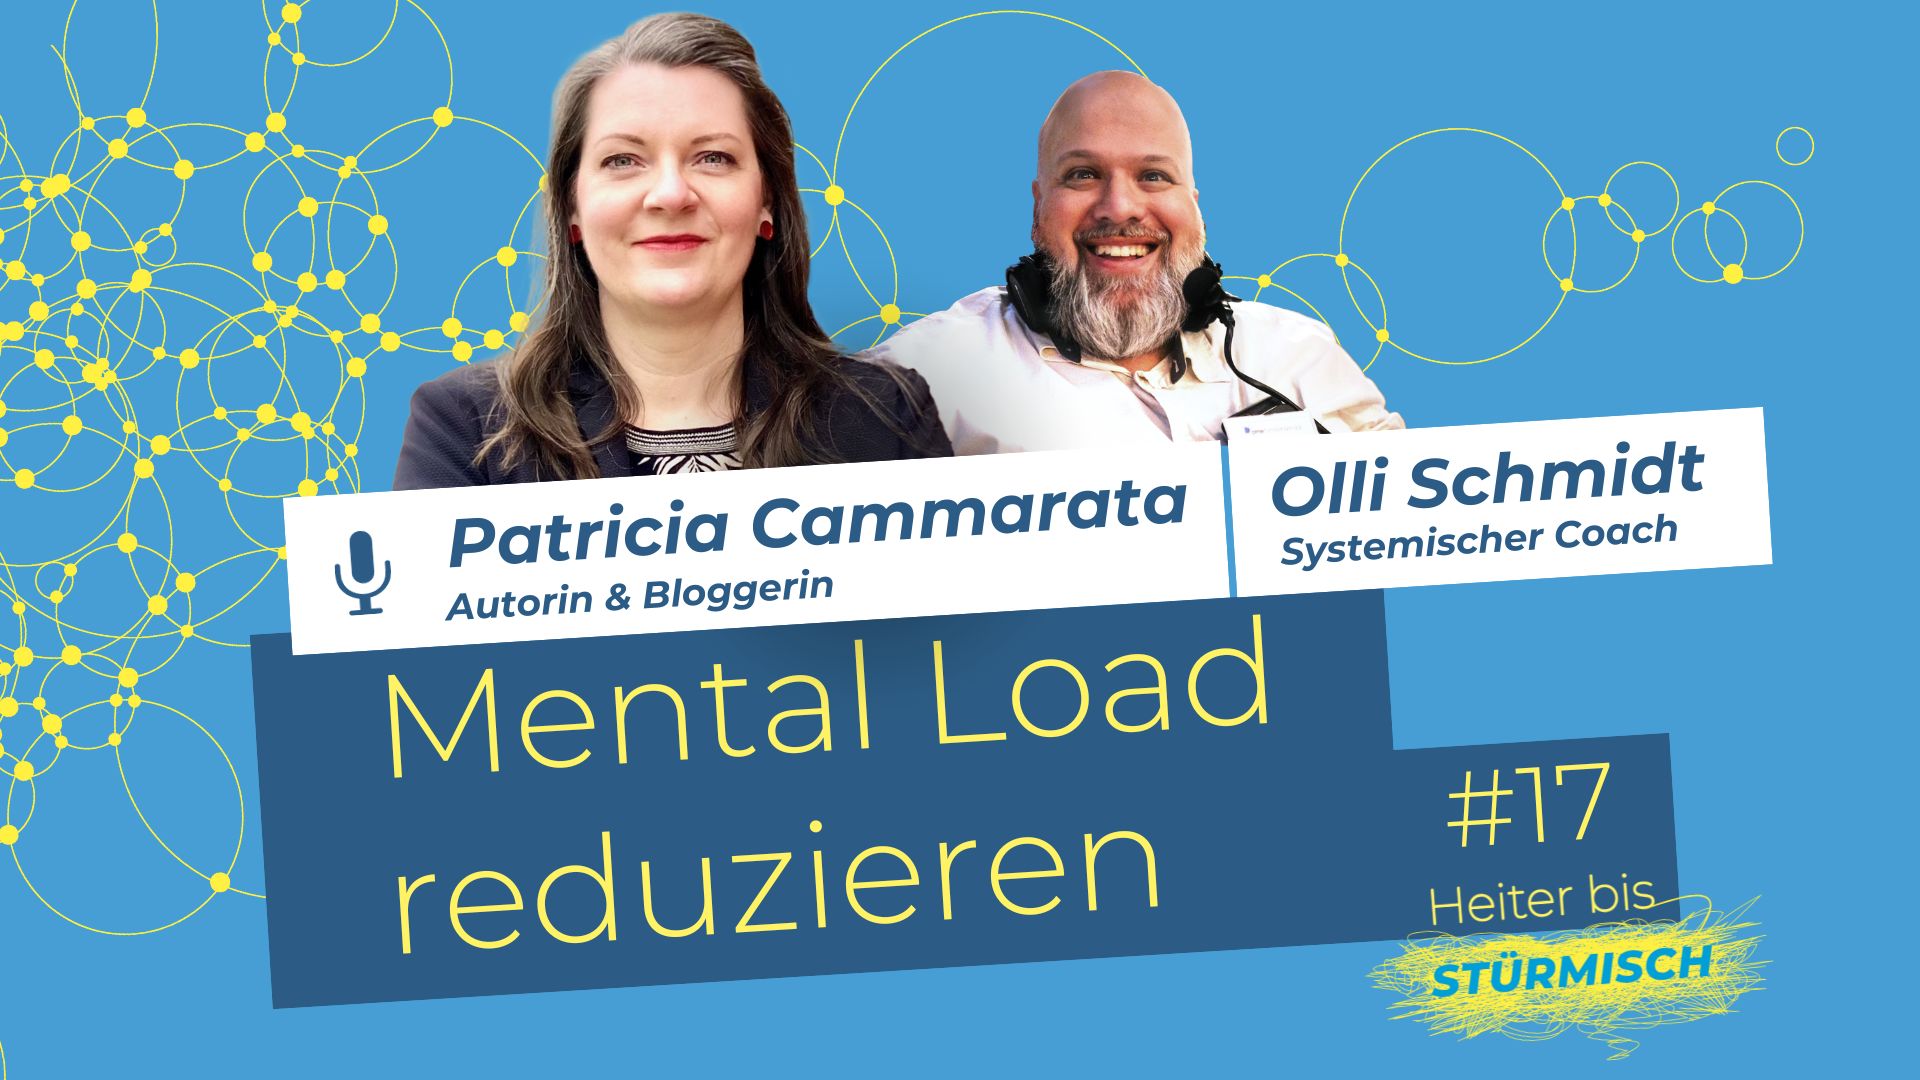 zu sehen sind Mental Load Expertin Patricia Cammarata und Podcast-Host Olli Schmidt